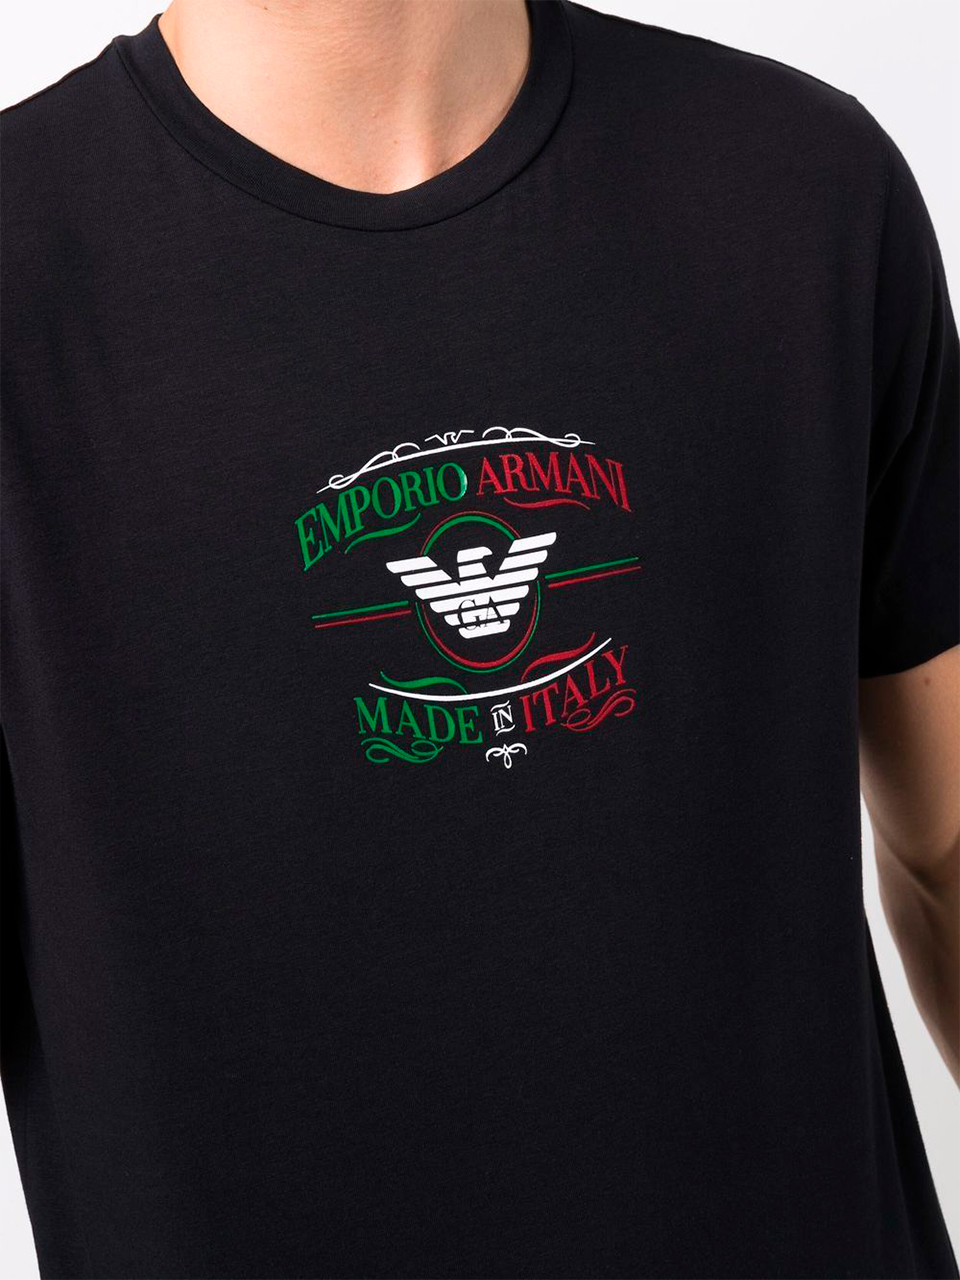 Imagem de: Camiseta Emporio Armani Preta com Estampa Bicolor